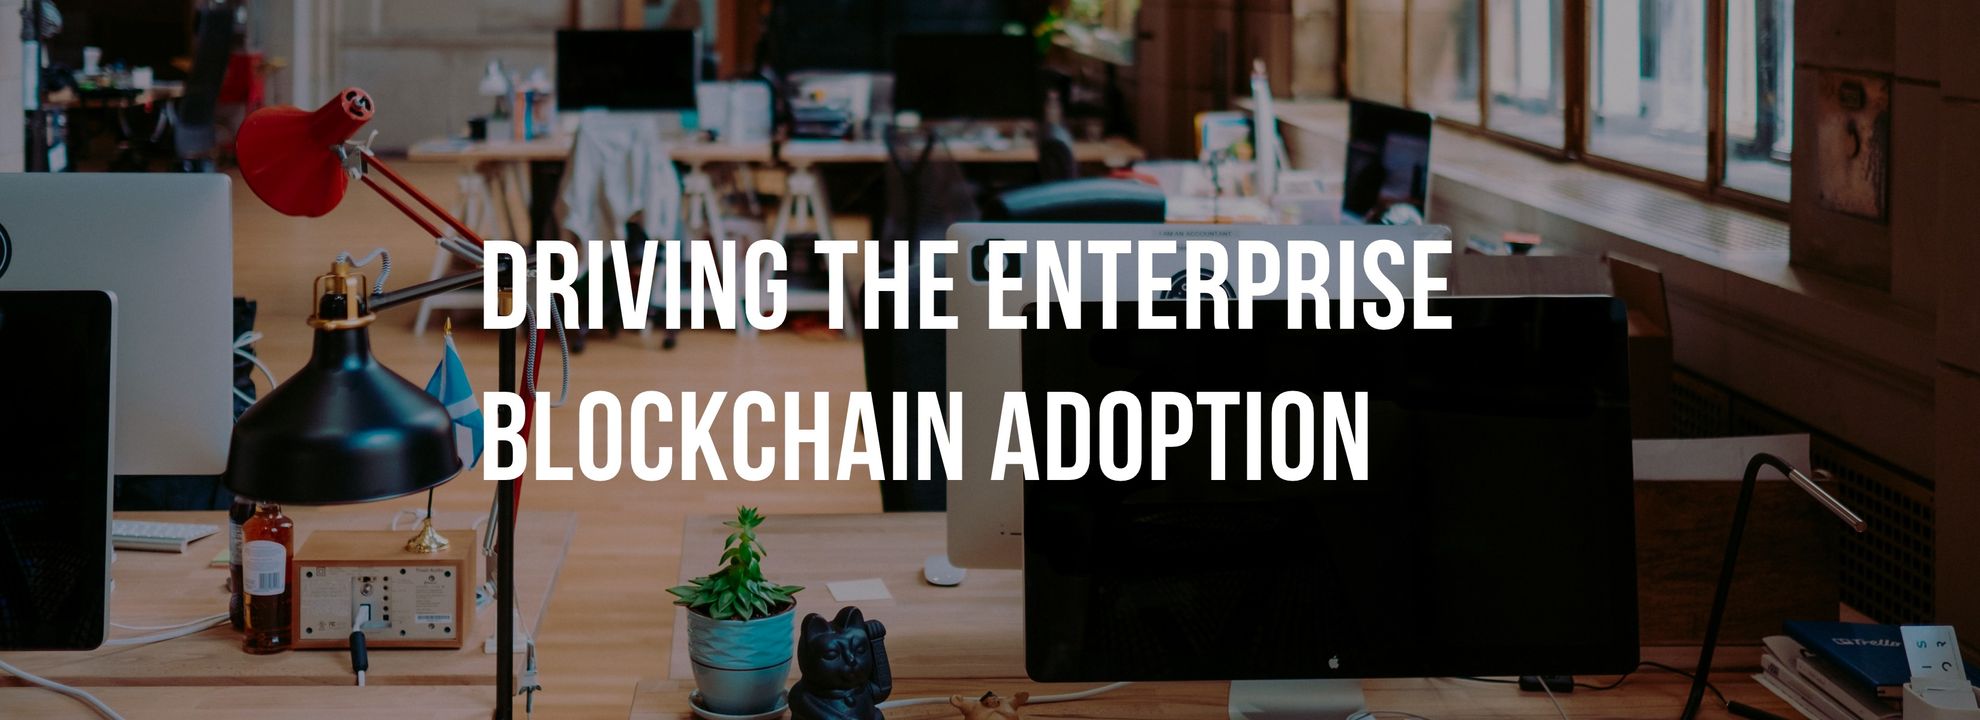 Driving the Enterprise Blockchain Adoption